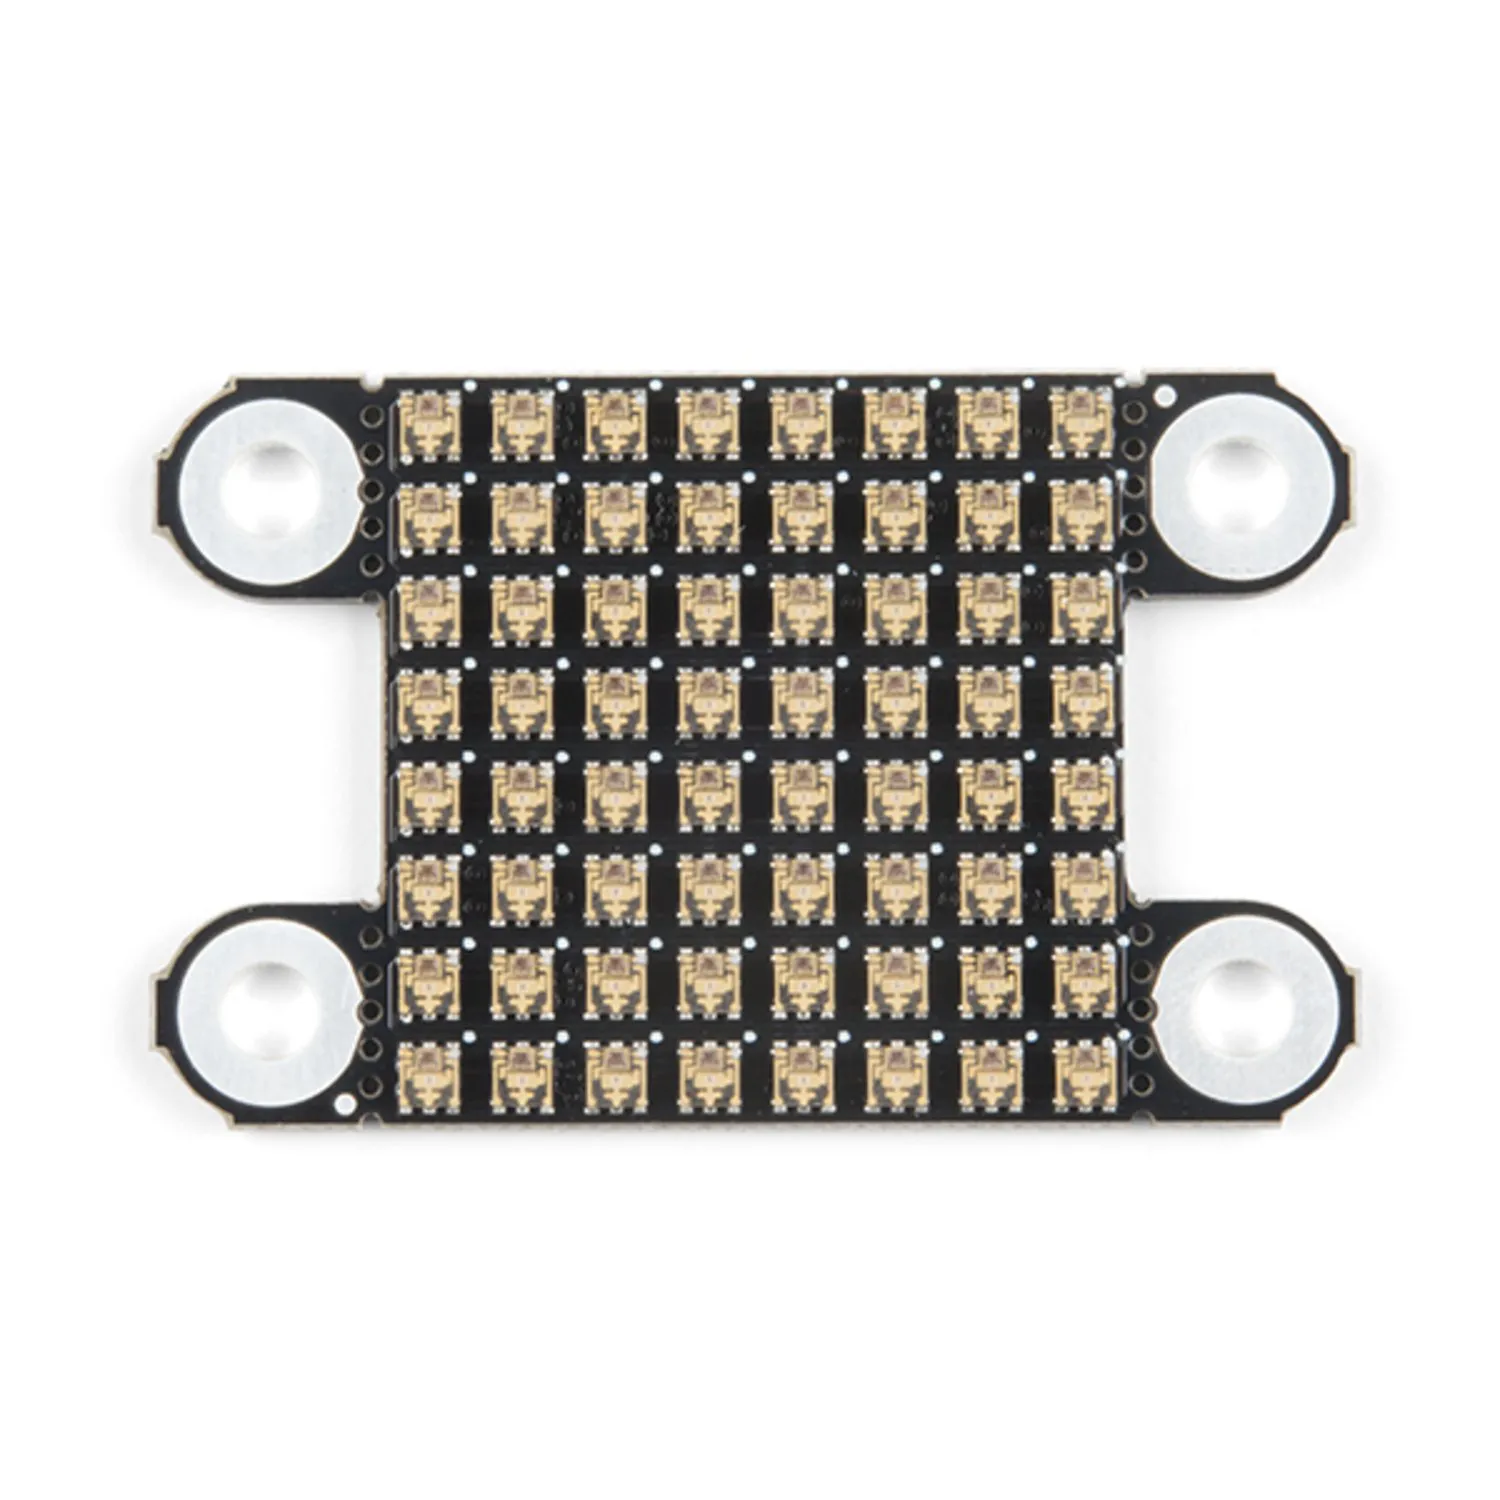 Photo of SparkFun LuMini LED Matrix - 8x8 (64 x APA102-2020)